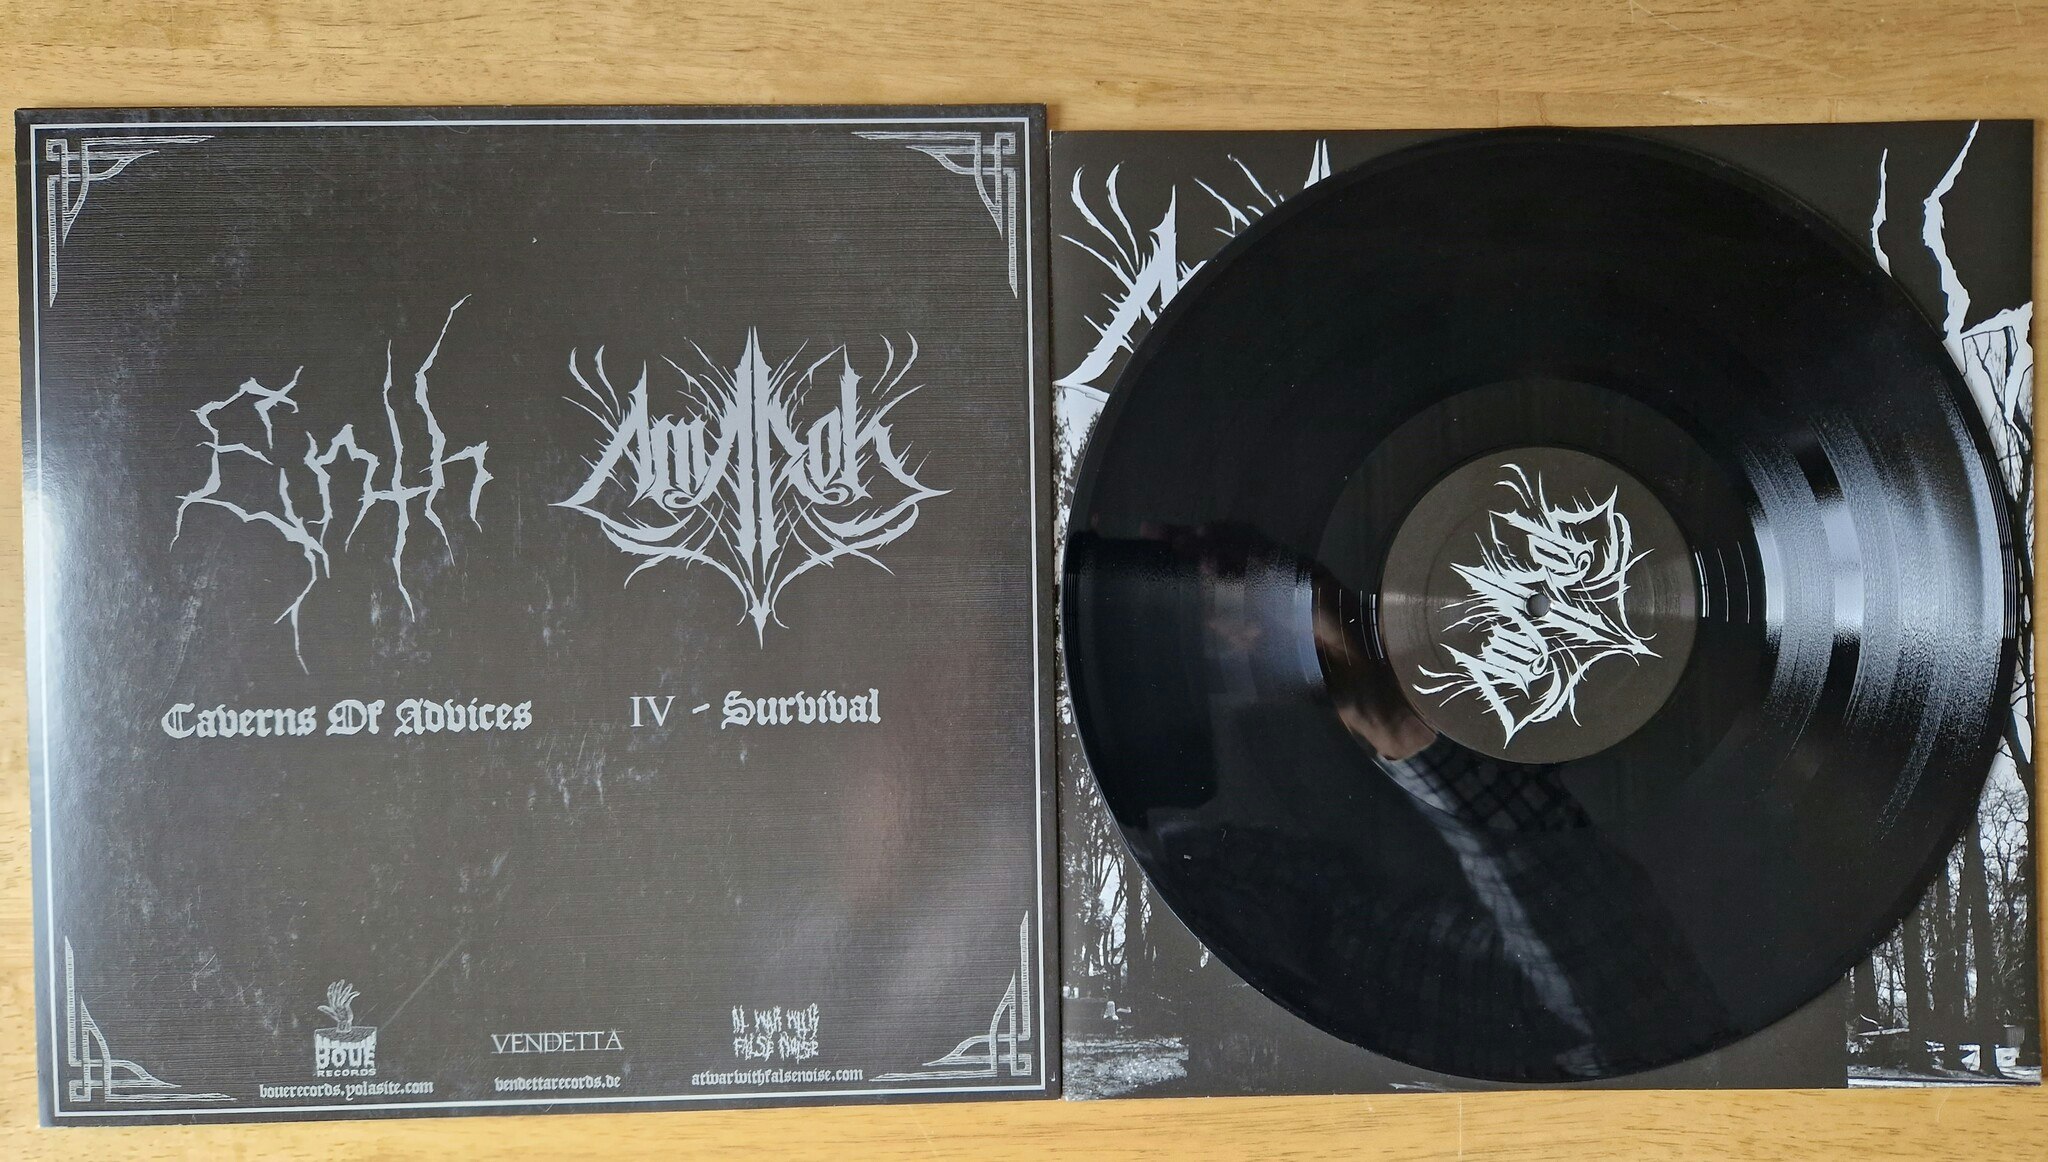 Enth/Amarok, Enth/Amarok. Vinyl LP